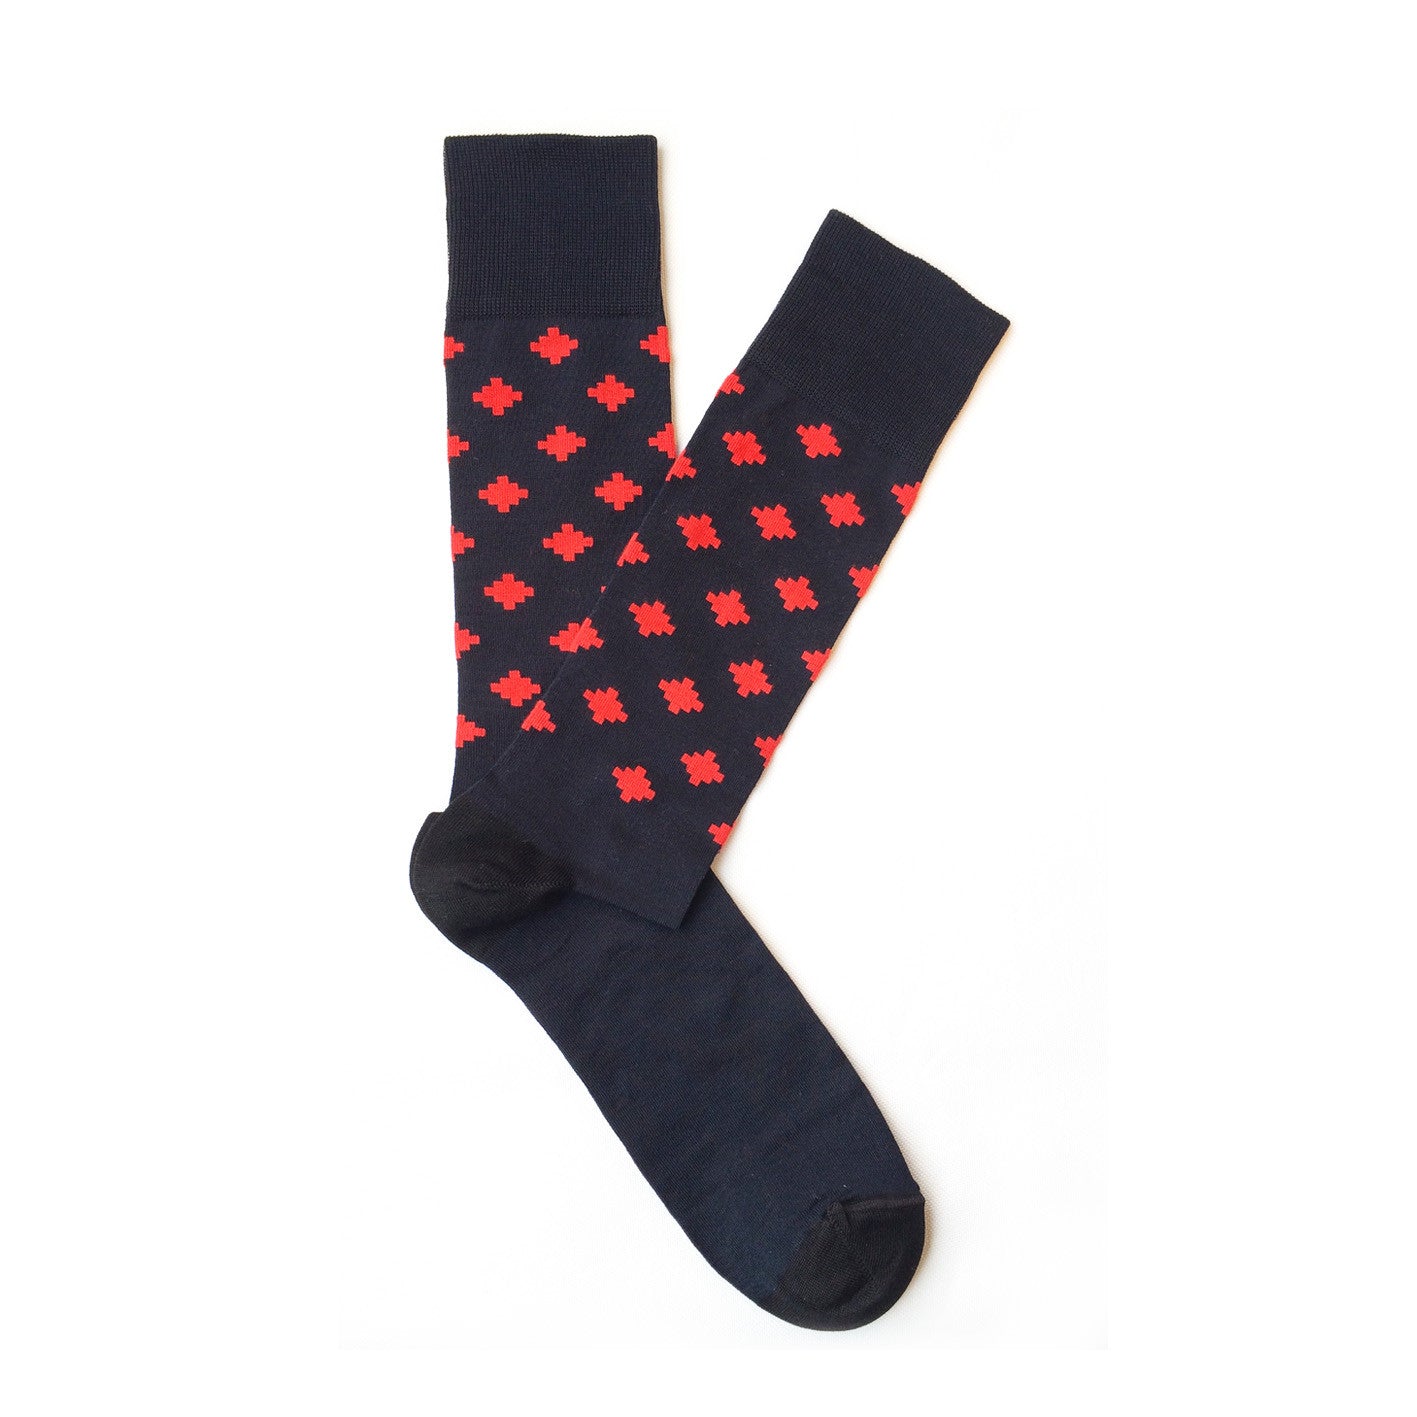 Giraffecool-Giraffe-Cool-Brand-Black-Red-Pixelated-Dots-Pixel-Mercerized-And-Brushed-Cotton-Fashion-Socks-Open-Pair